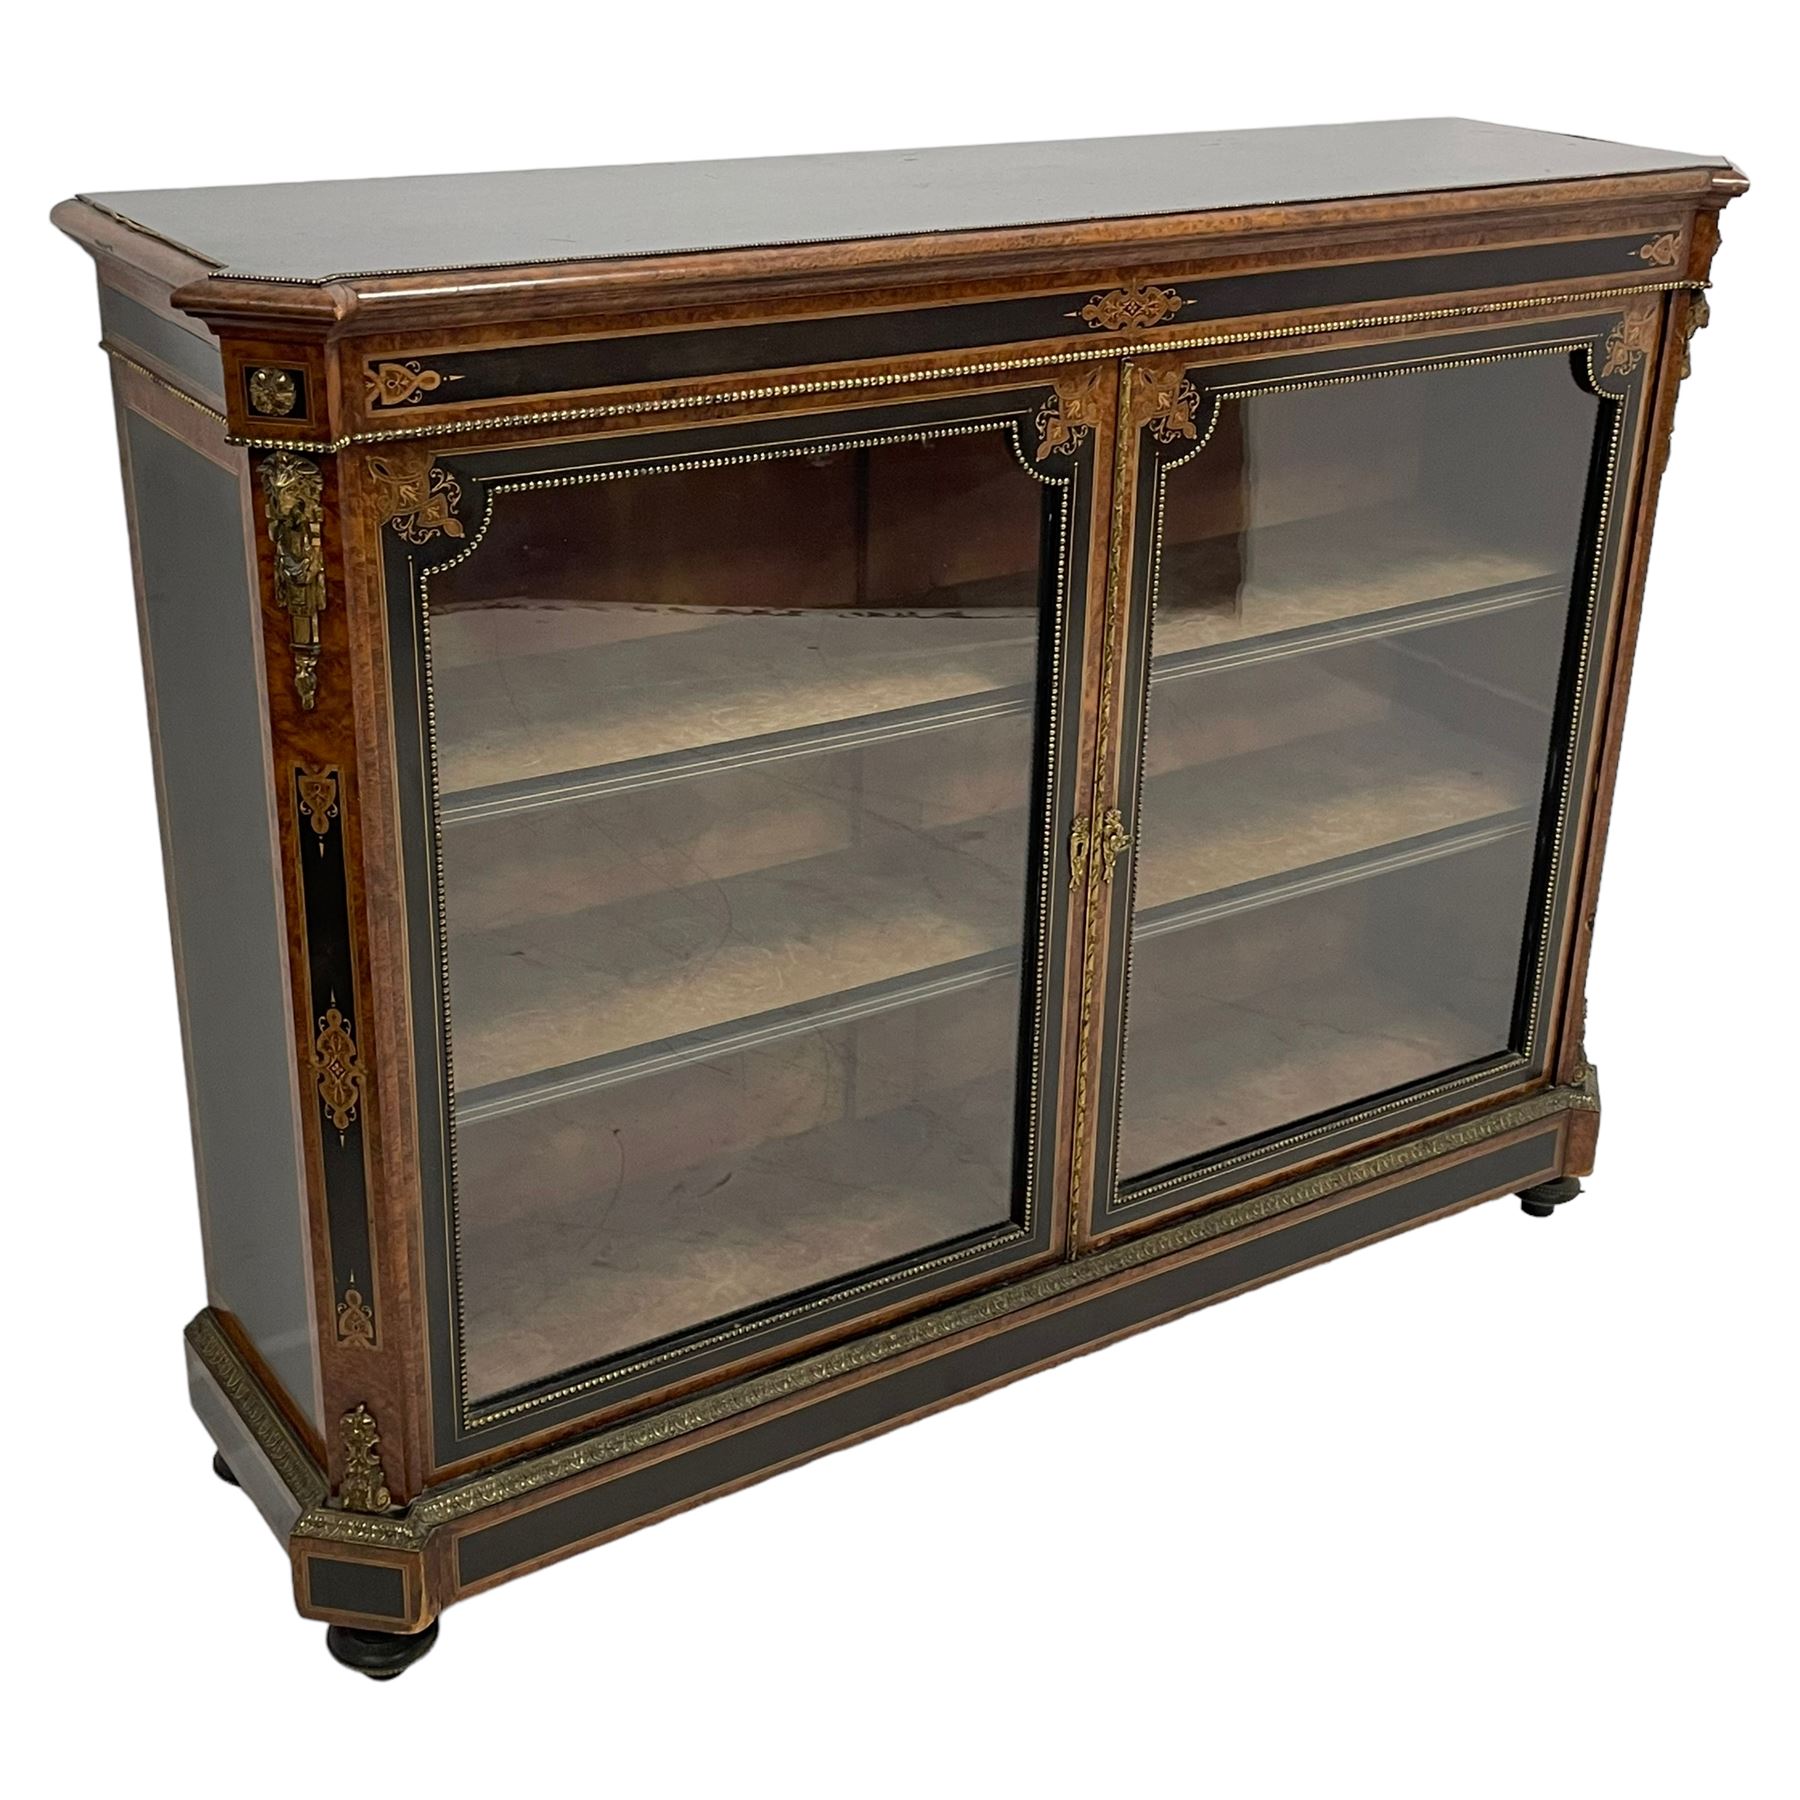 Victorian ebonised and amboyna wood credenza pier cabinet - Image 12 of 26